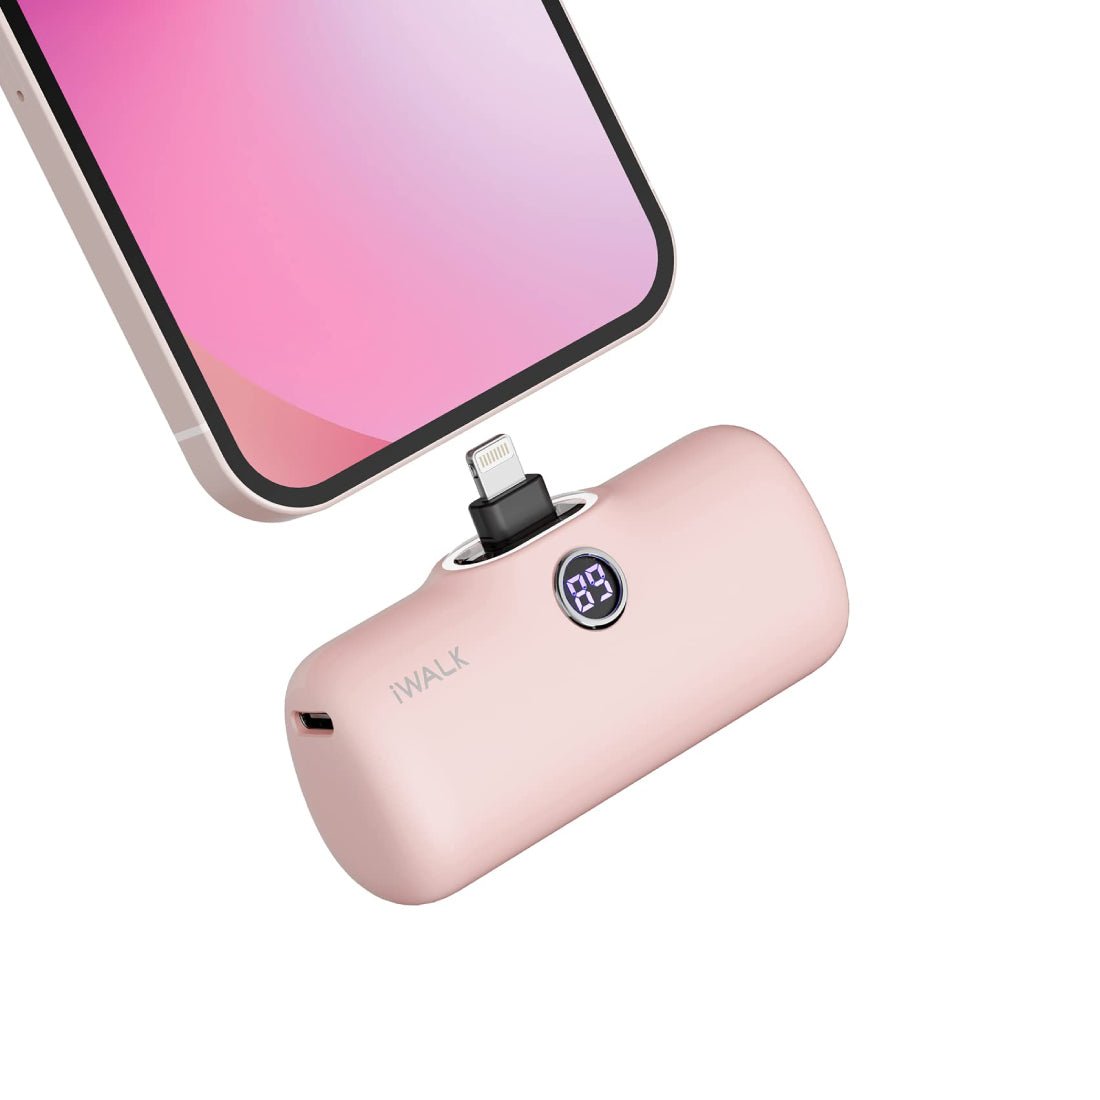 iWalk Portable Charger 4800mAh Power Bank - Pink - مزود طاقة - Store 974 | ستور ٩٧٤